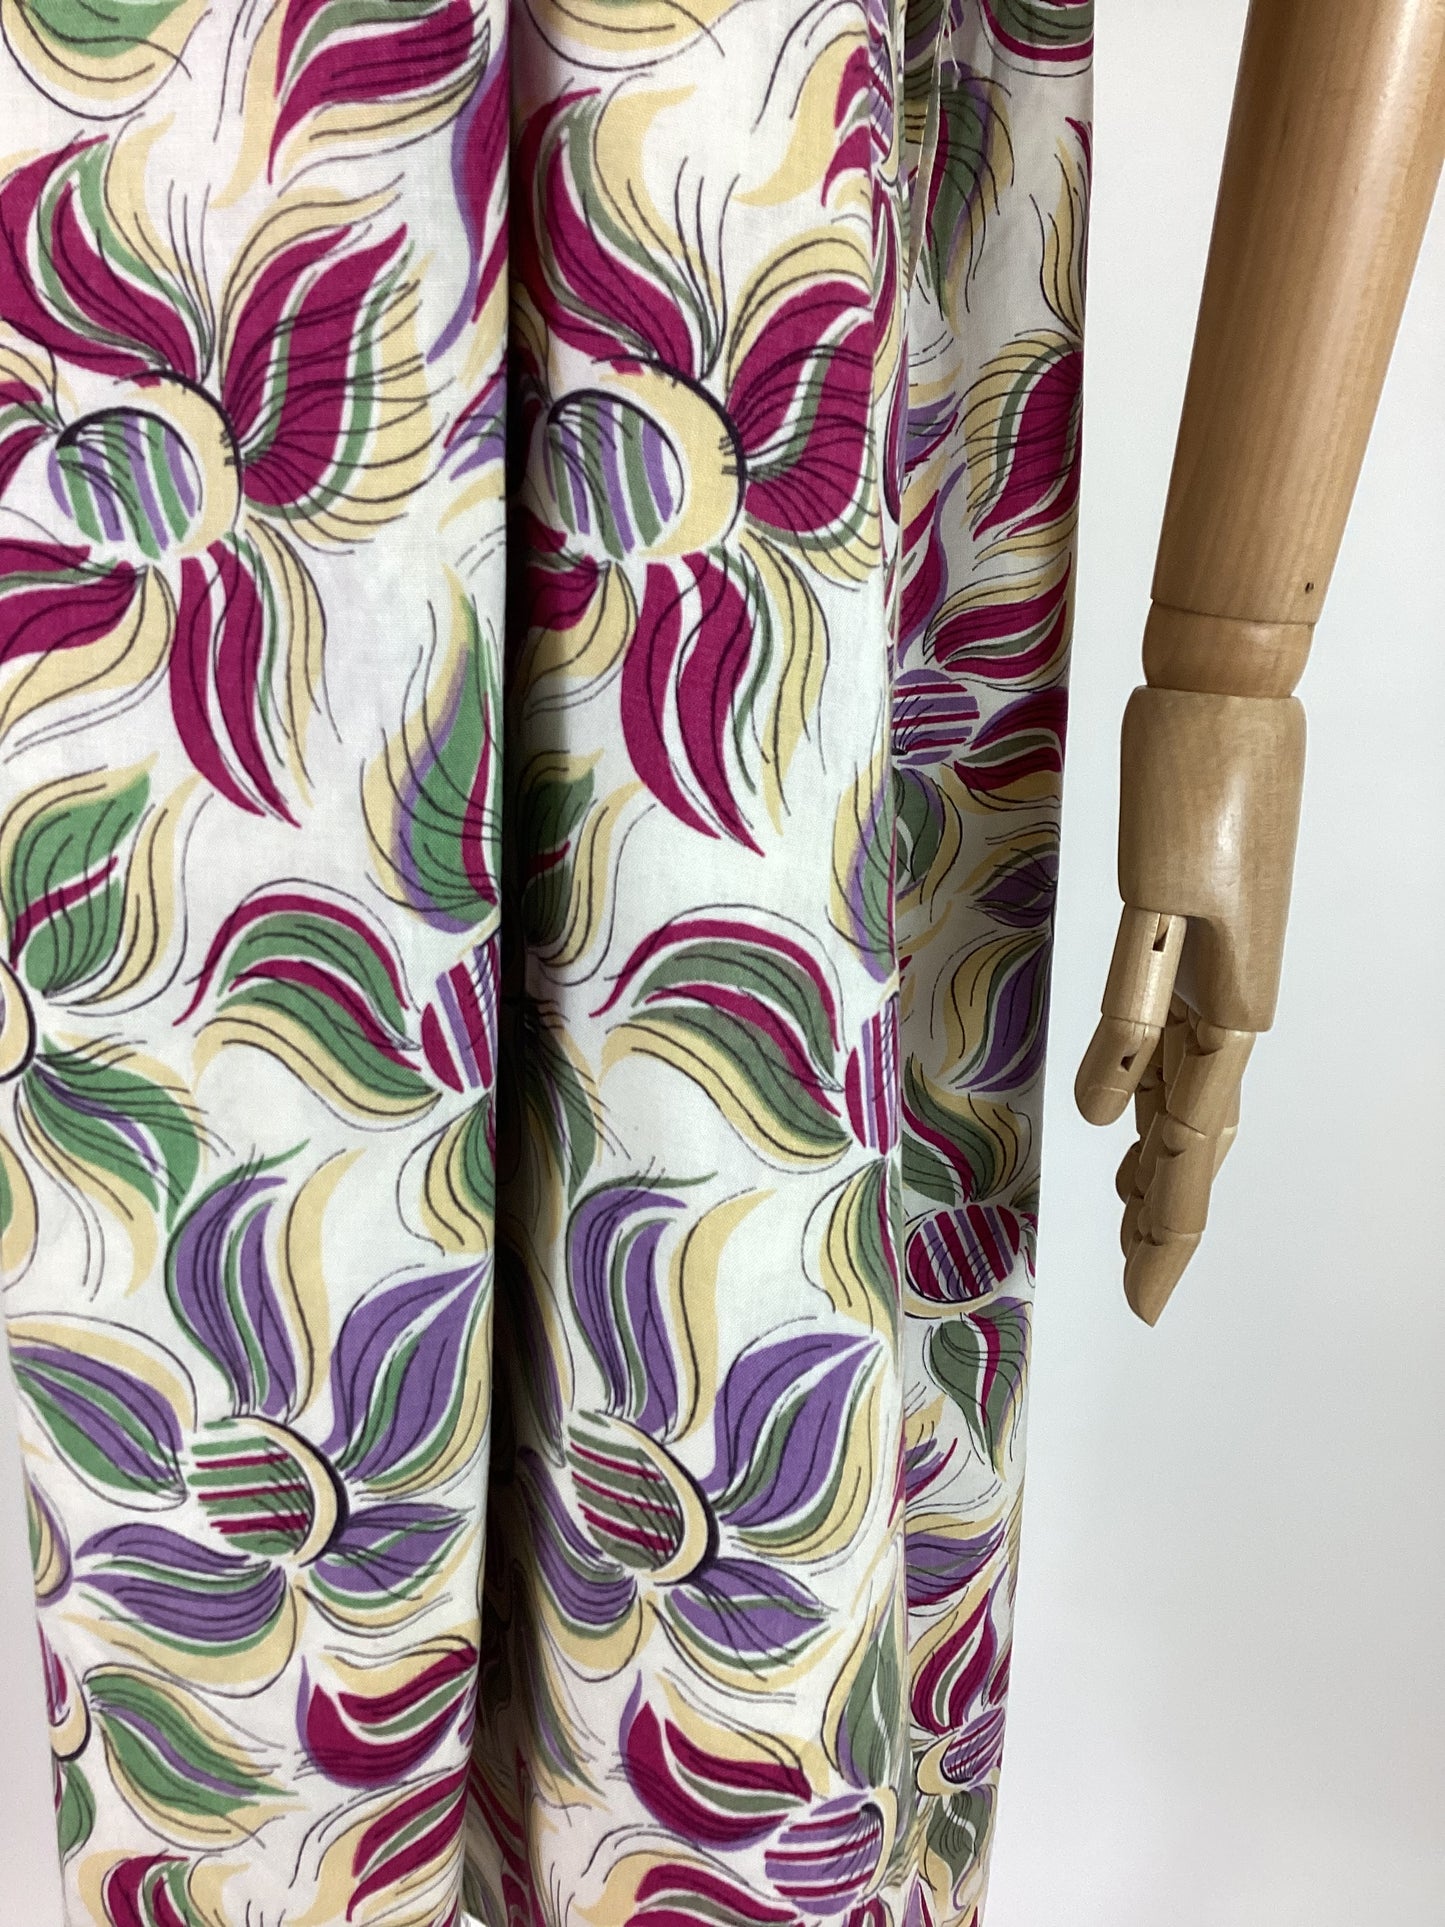 Original 1940’s Fabulous Dressmaking fabric - Hot Fuchsia, lilac, sage, buttermilk yellow on a bed of cream